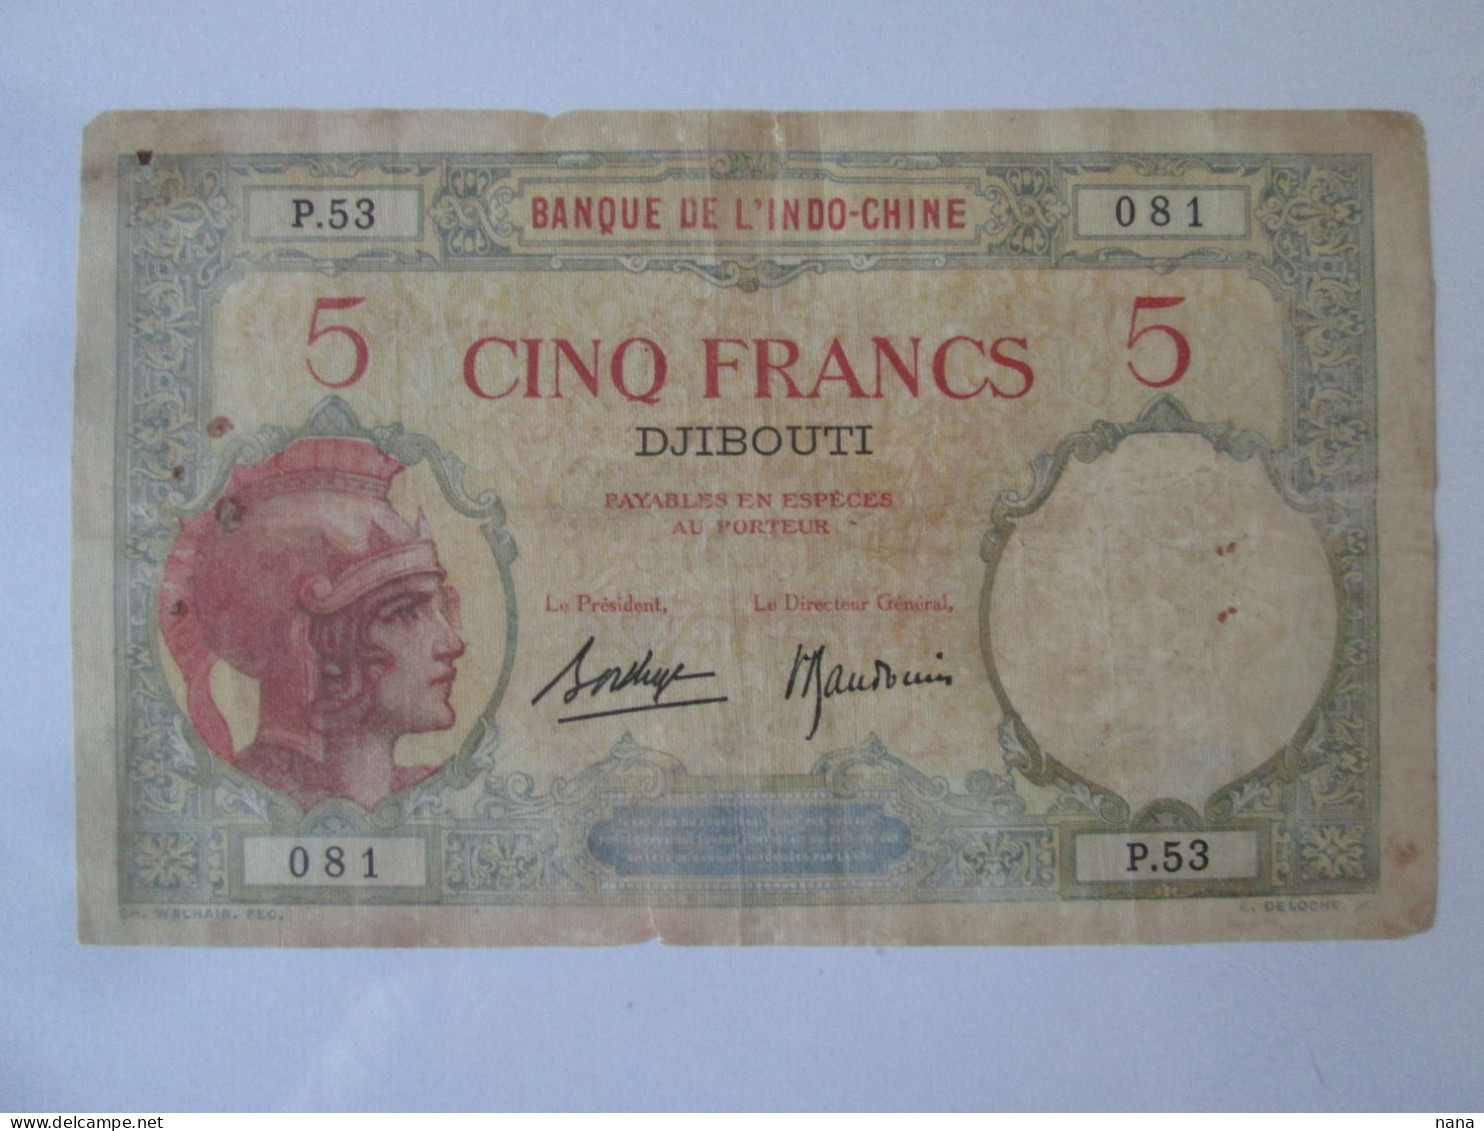 Rare! Djibouti 5 Francs 1943,see Pictures - Djibouti